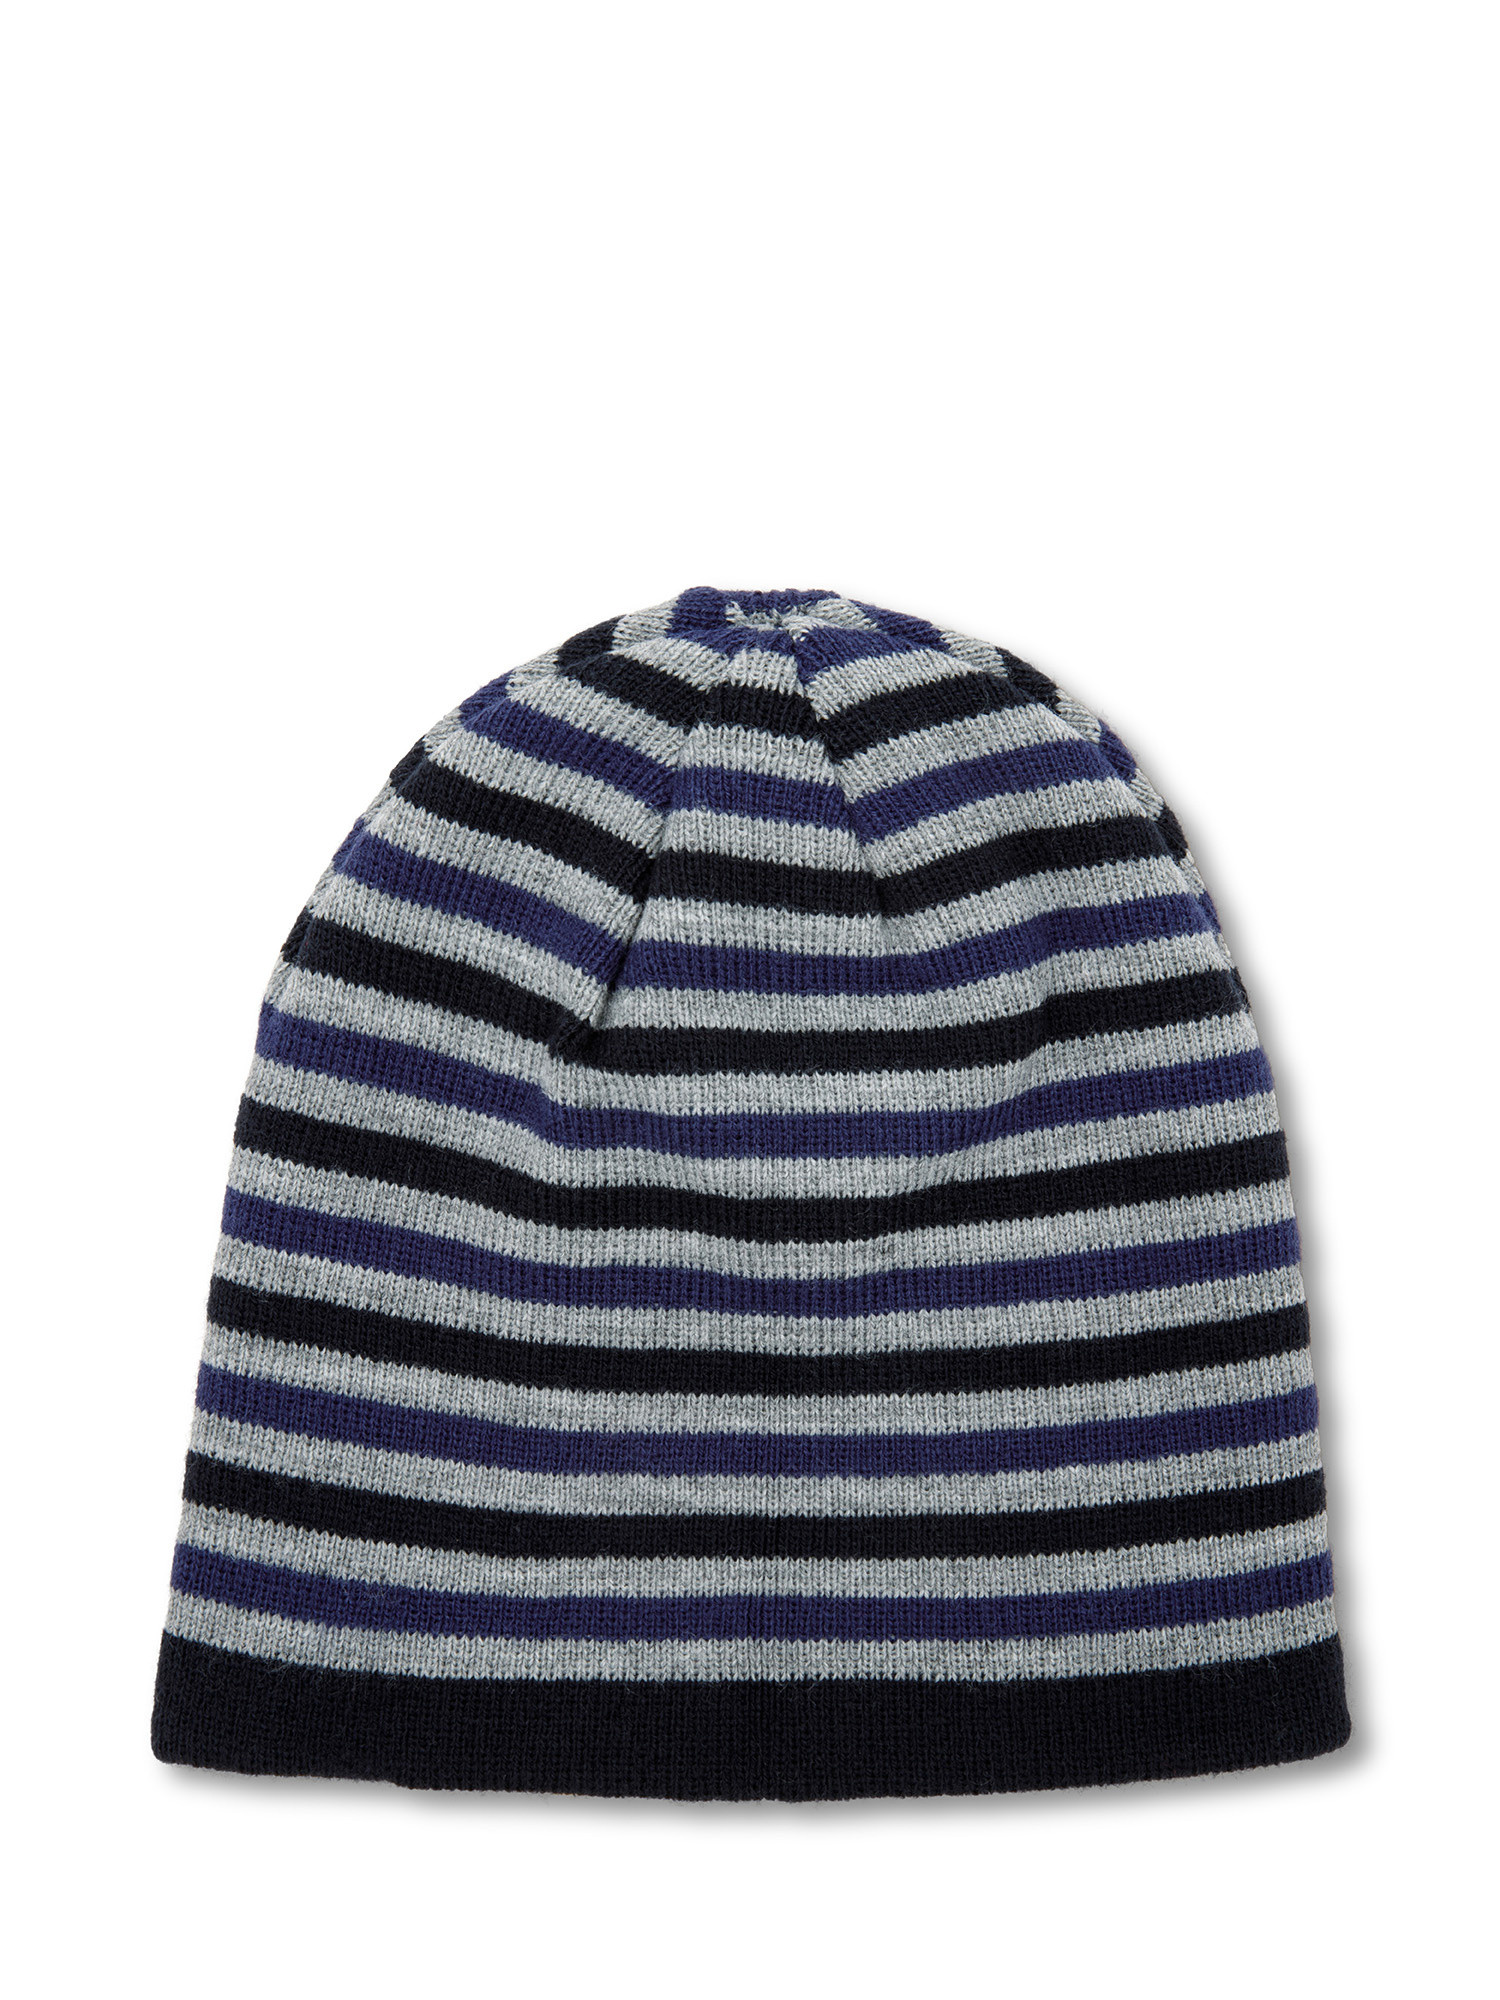 Luca D'Altieri - Striped knit hat, Black, large image number 0